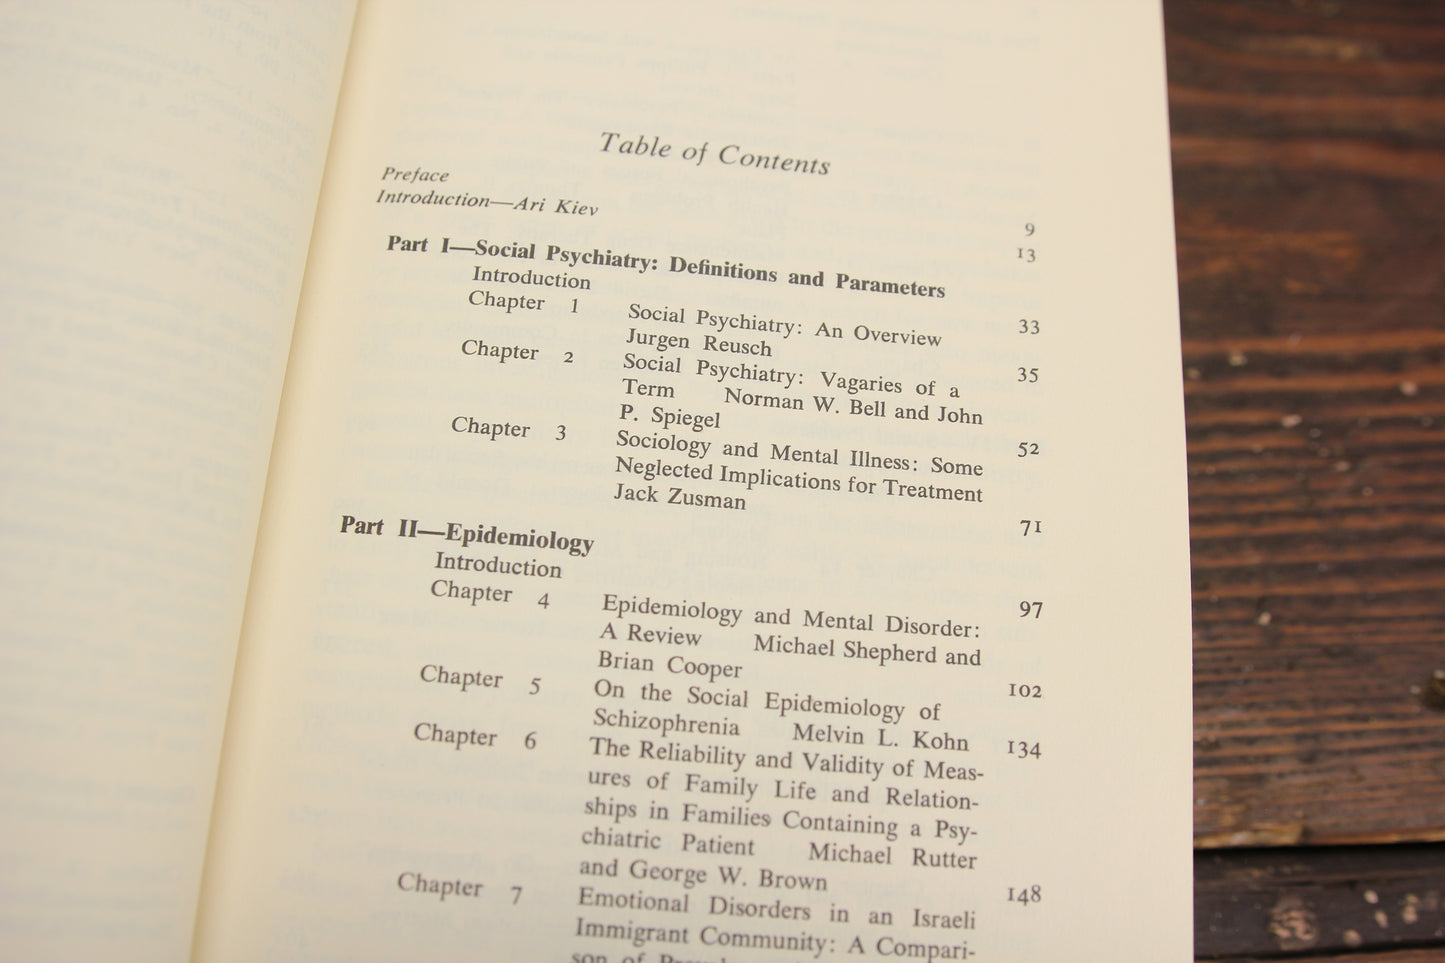 Social Psychiatry Volume 1, Edited by Ari Kiev, M.D., Copyright 1969